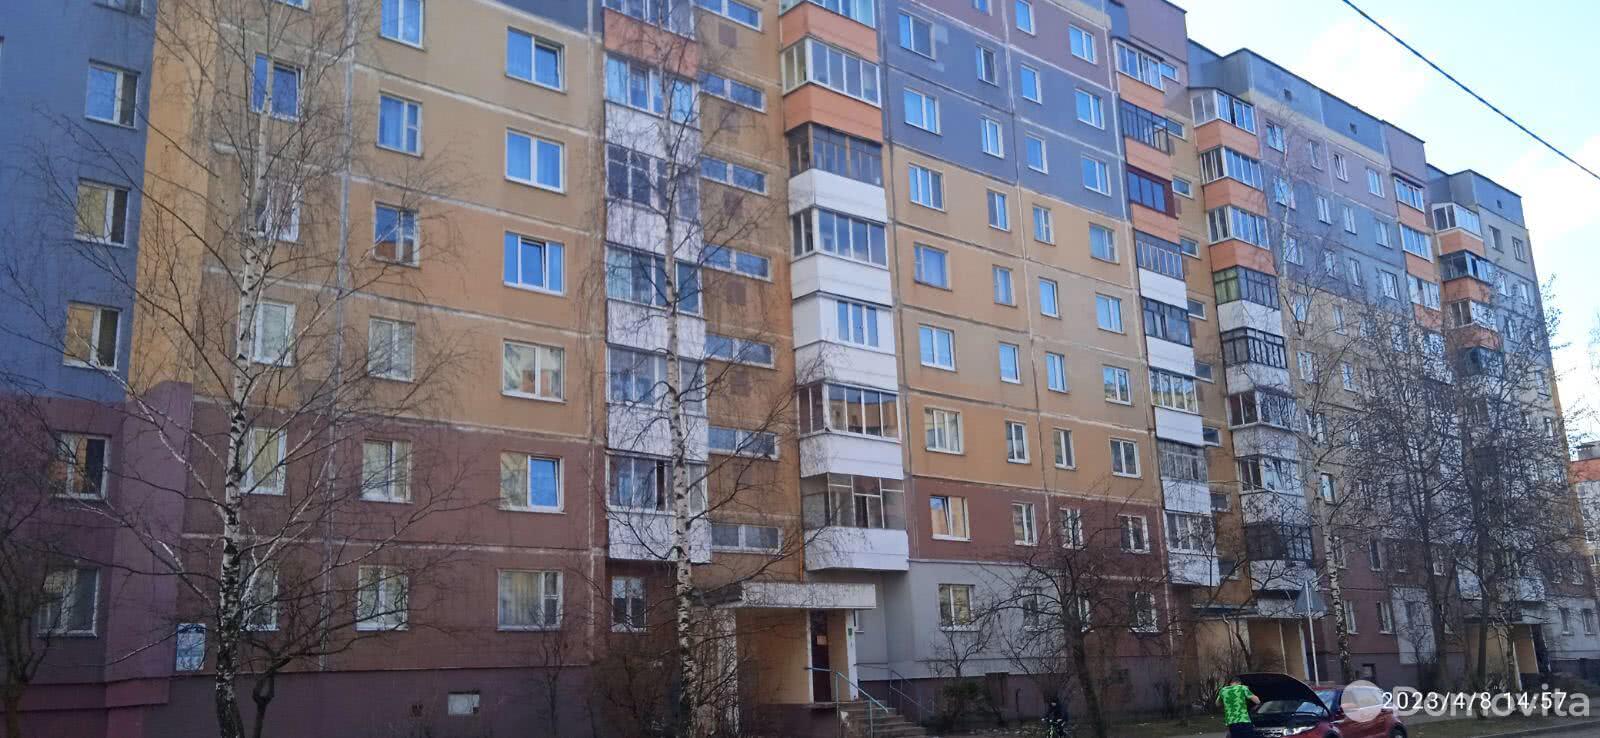 продажа квартиры, Витебск, ул. Чкалова, д. 41 К1